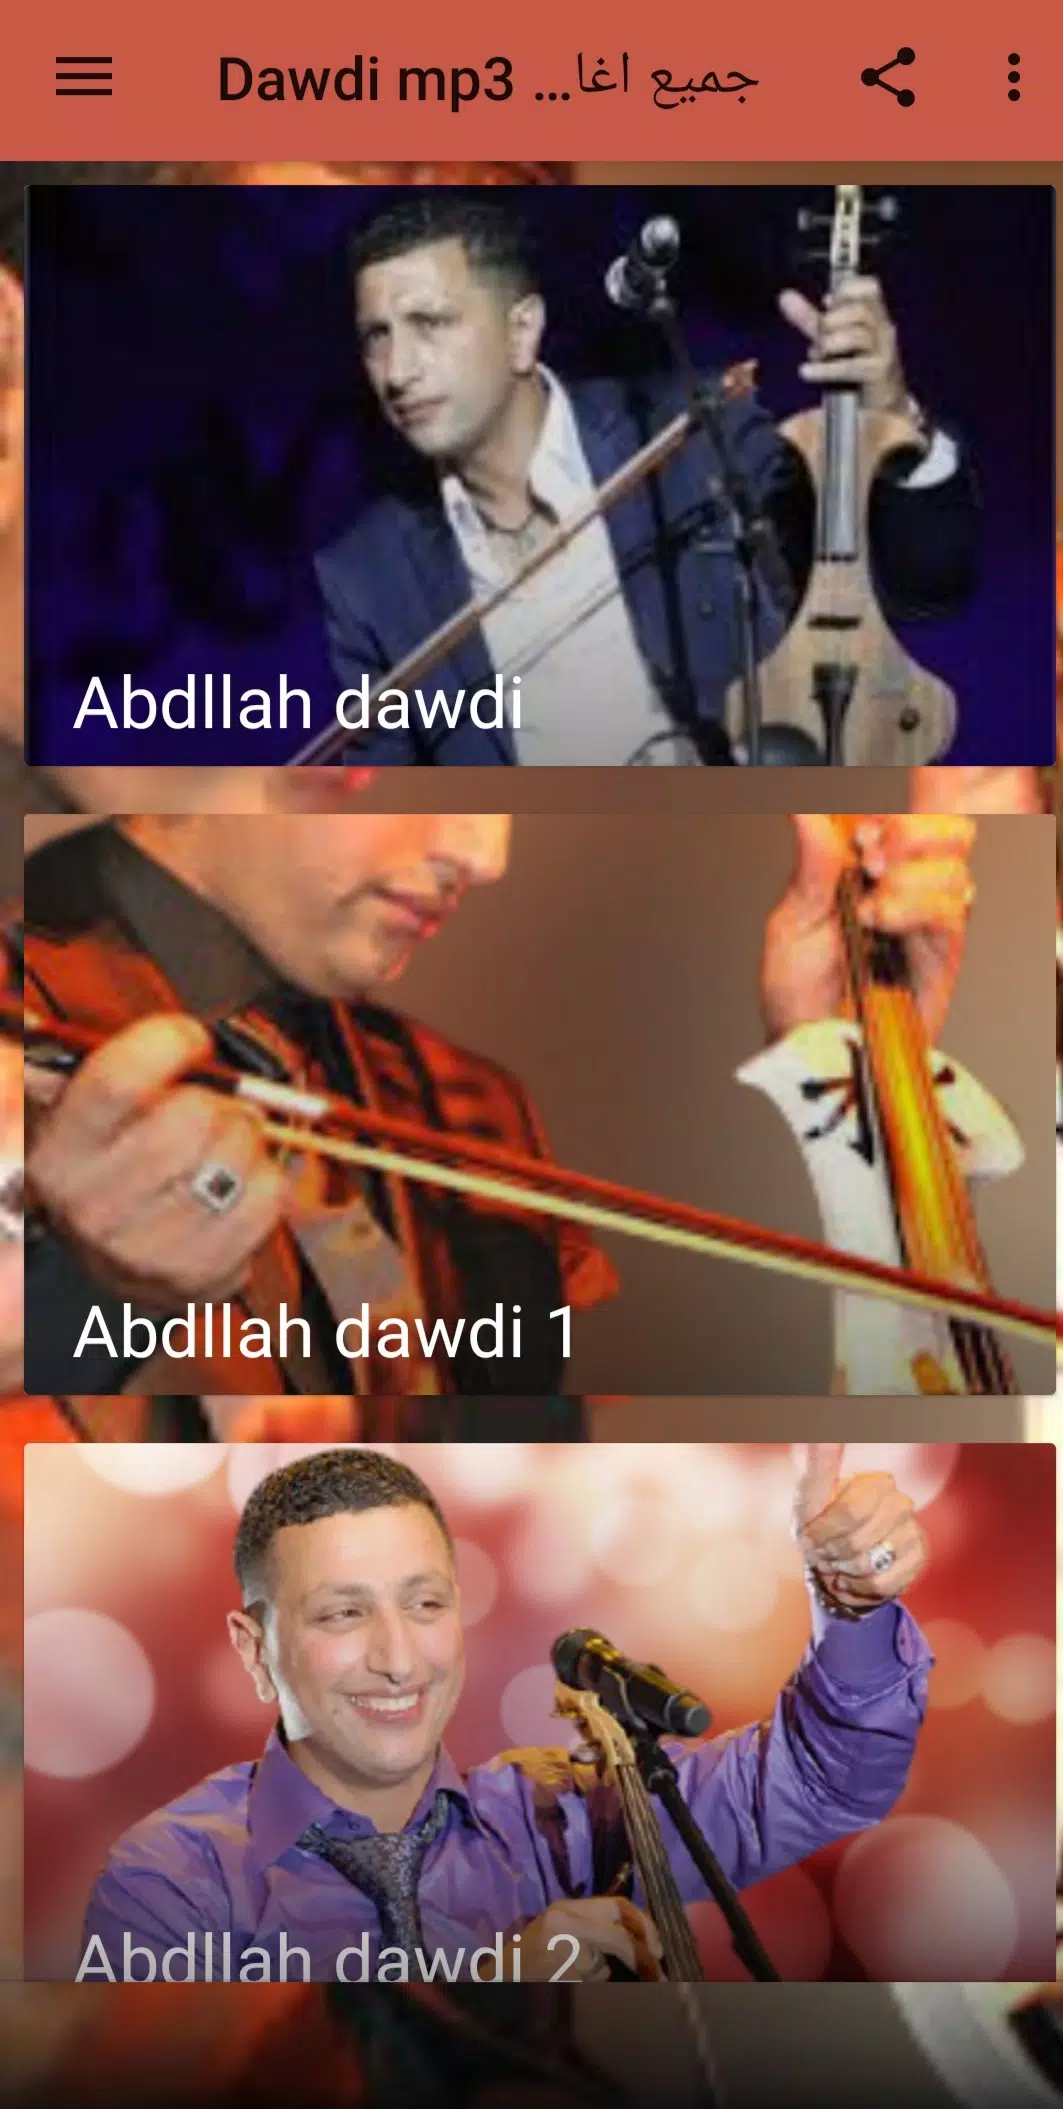 Dawdi mp3 جميع اغاني الداودي المشهورة for Android - APK Download